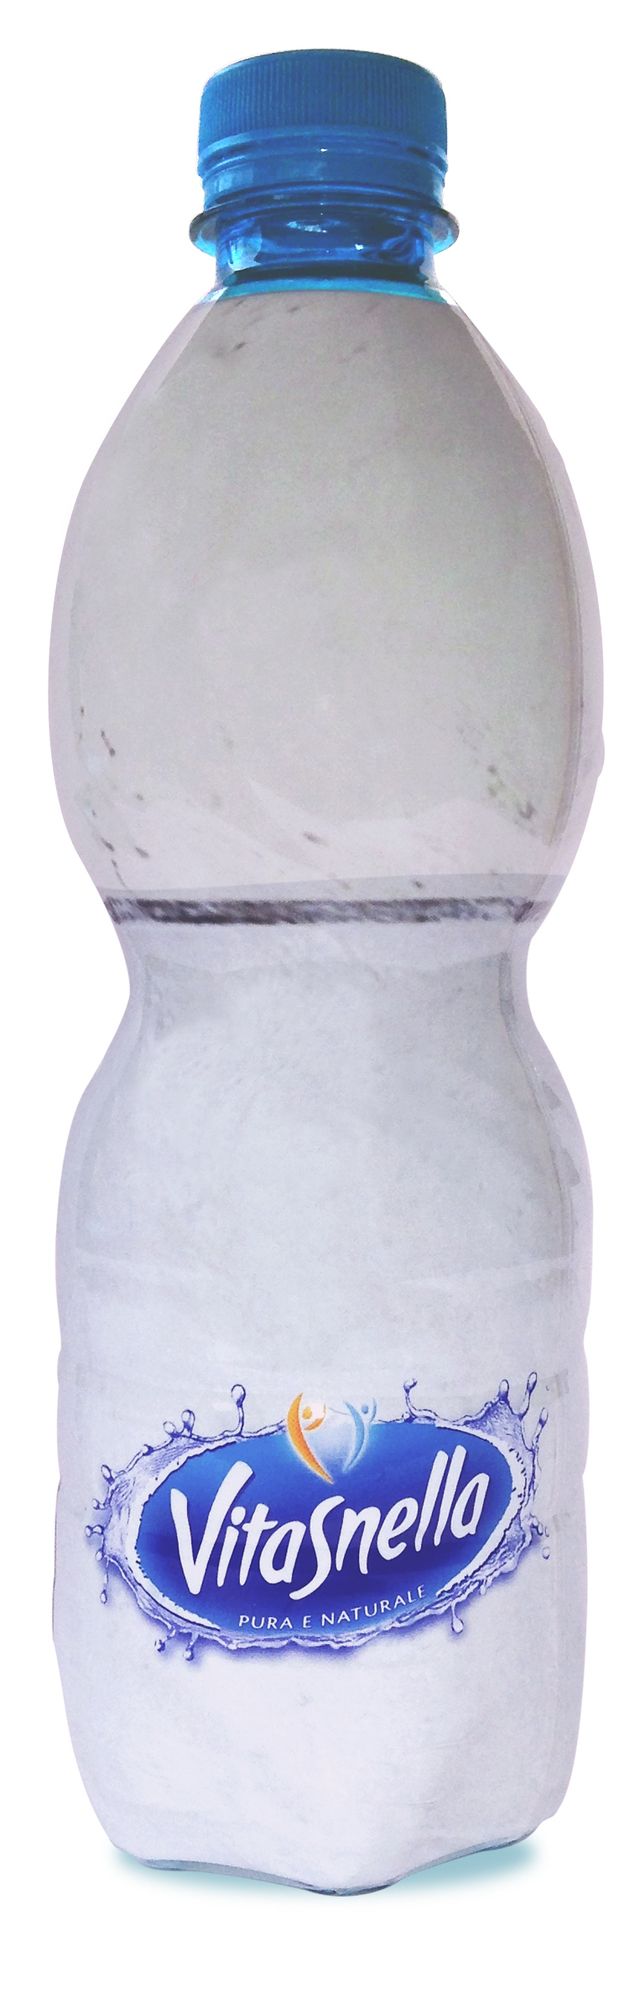 White, Bottle, Plastic bottle, One-piece garment, Day dress, 